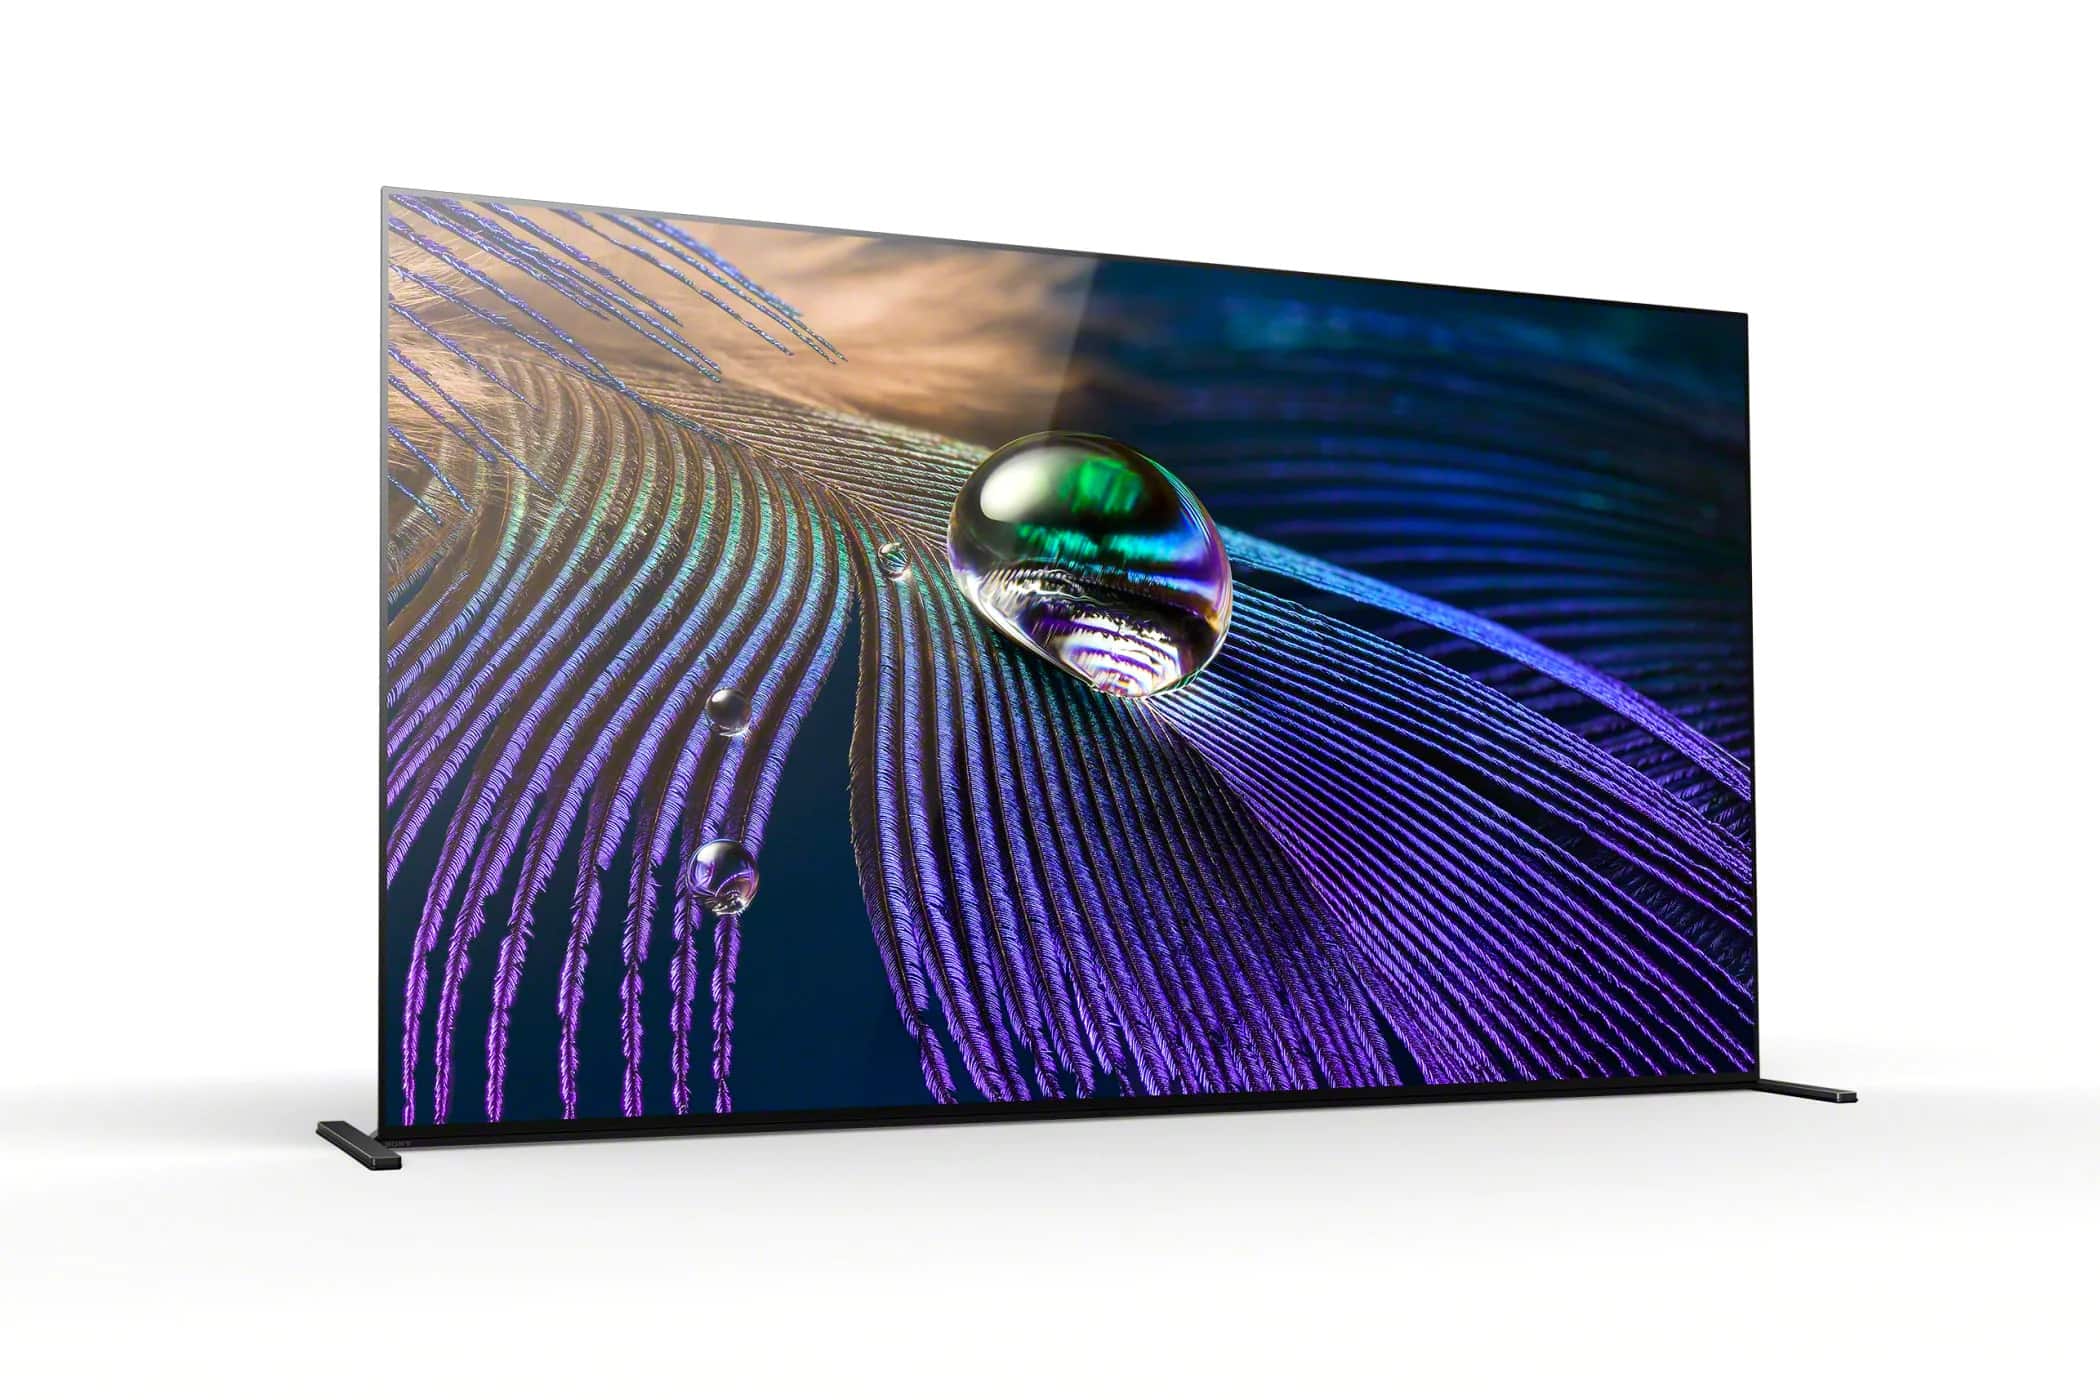 Nuova gamma OLED TV Bravia XR disponibile